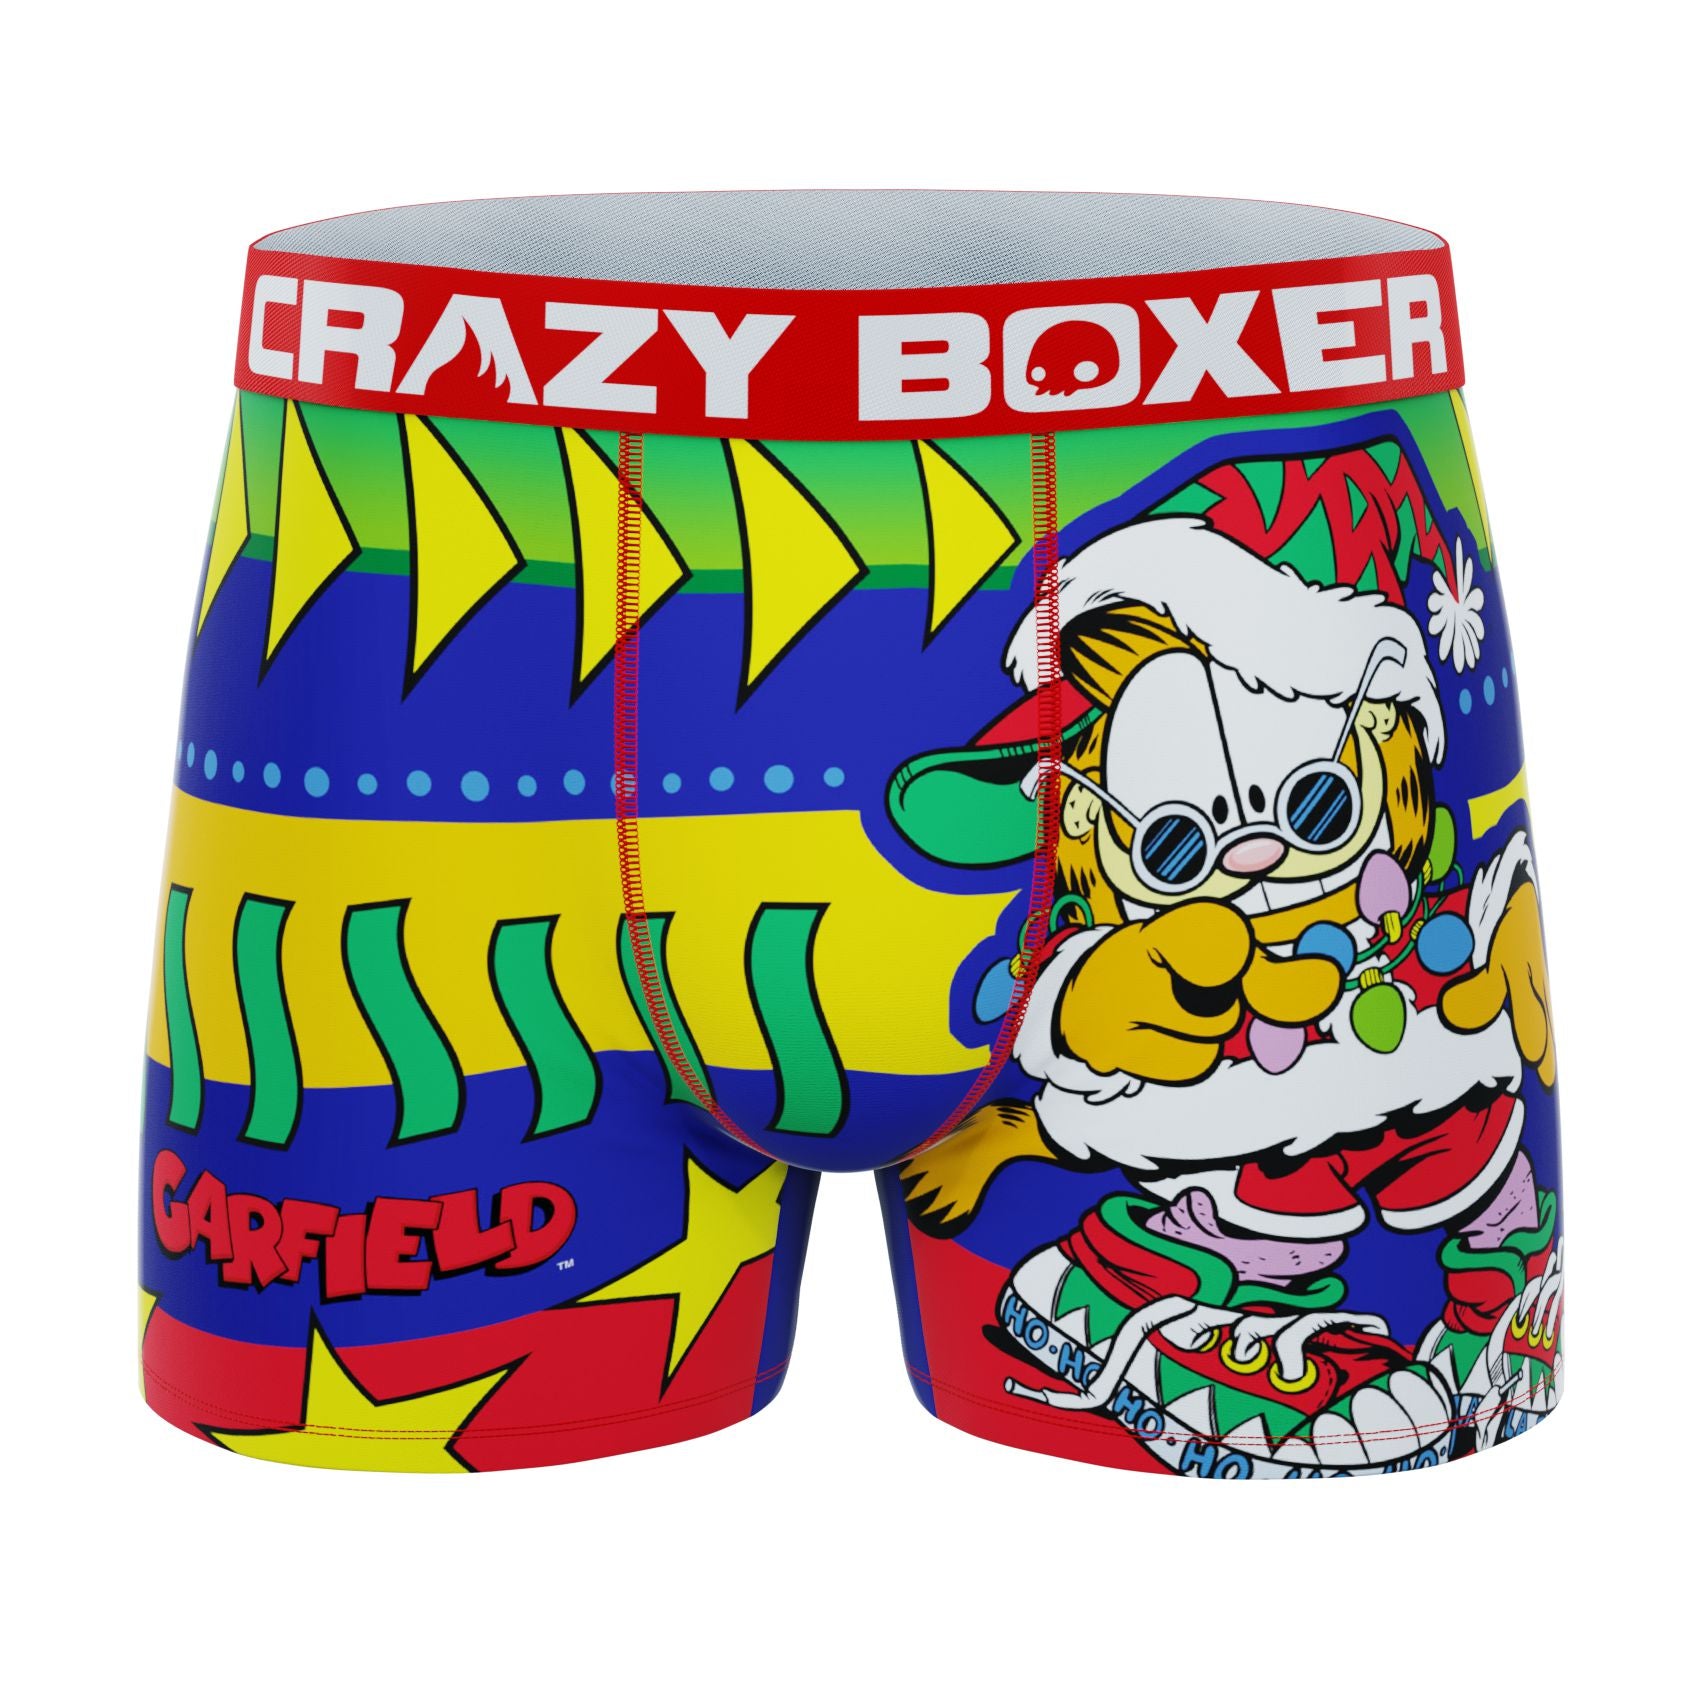 CRAZYBOXER Garfield Xmas Swag Holidays Men's Boxer Briefs